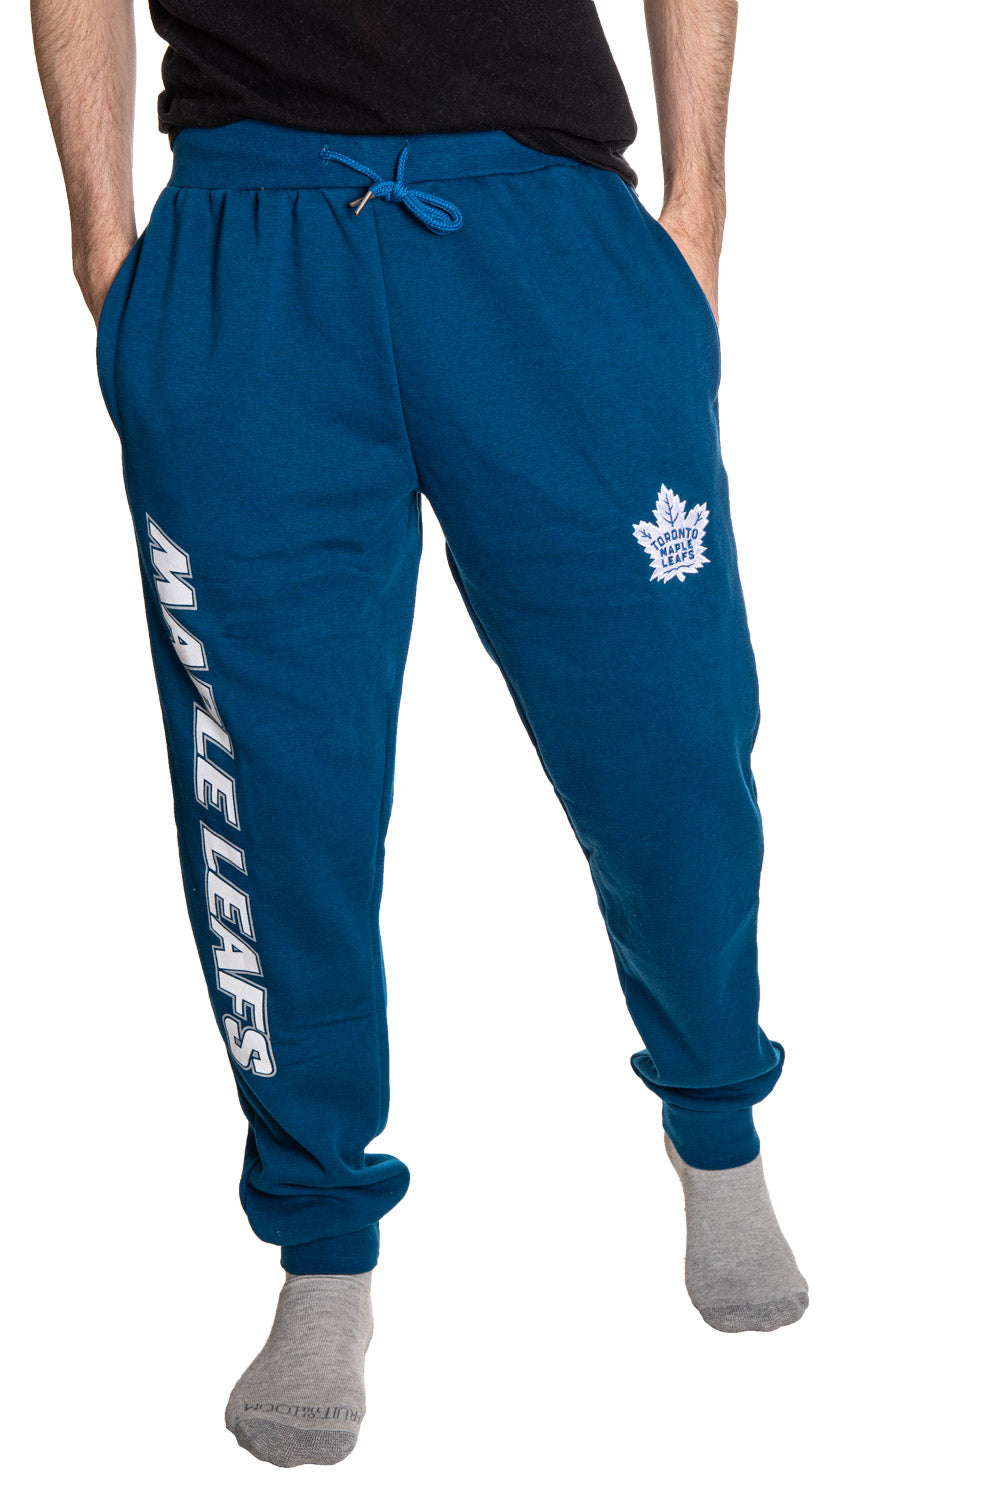 Toronto Maple Leafs Tie Dye Bikini